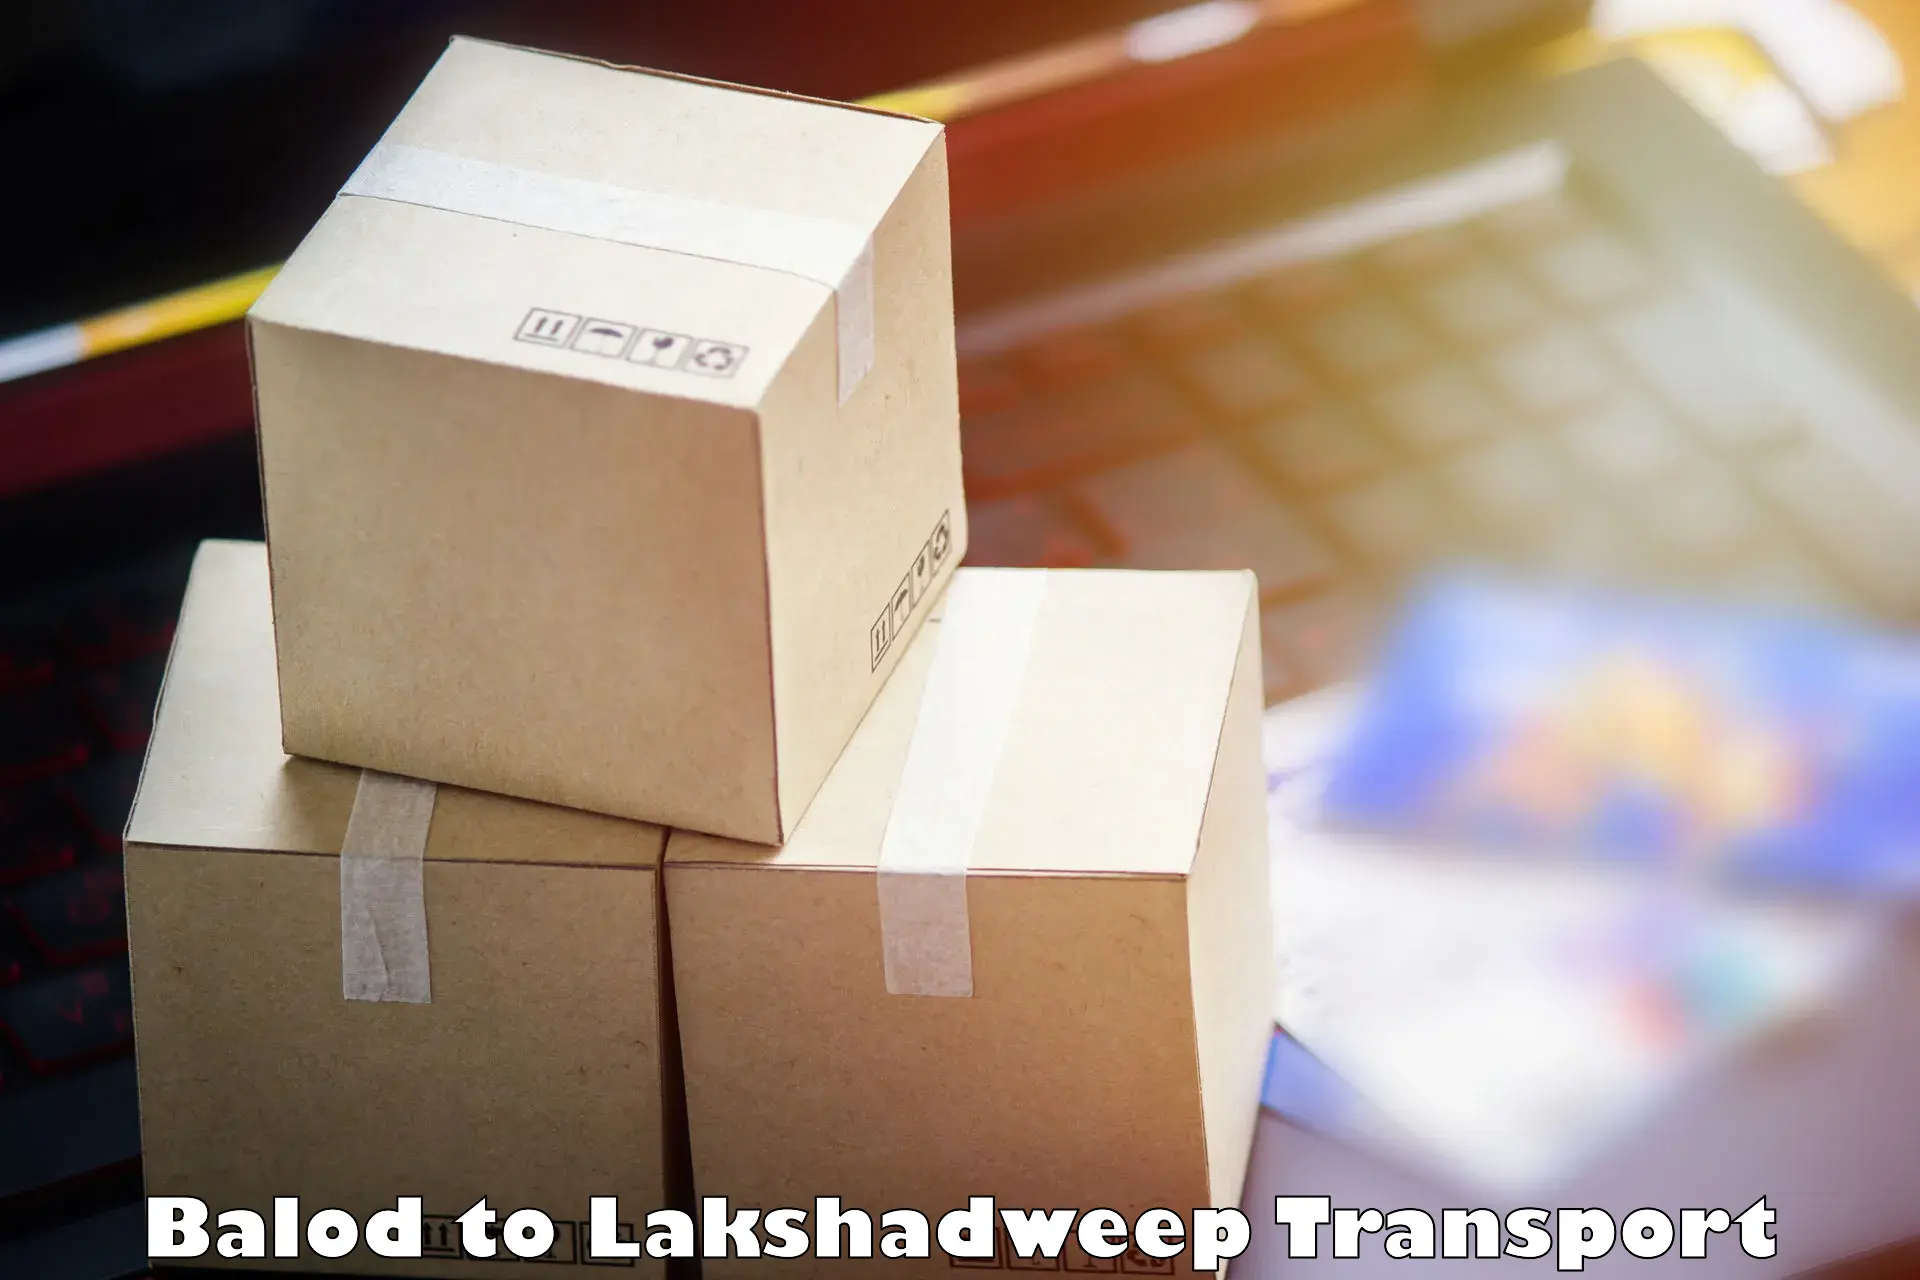 Daily transport service Balod to Lakshadweep